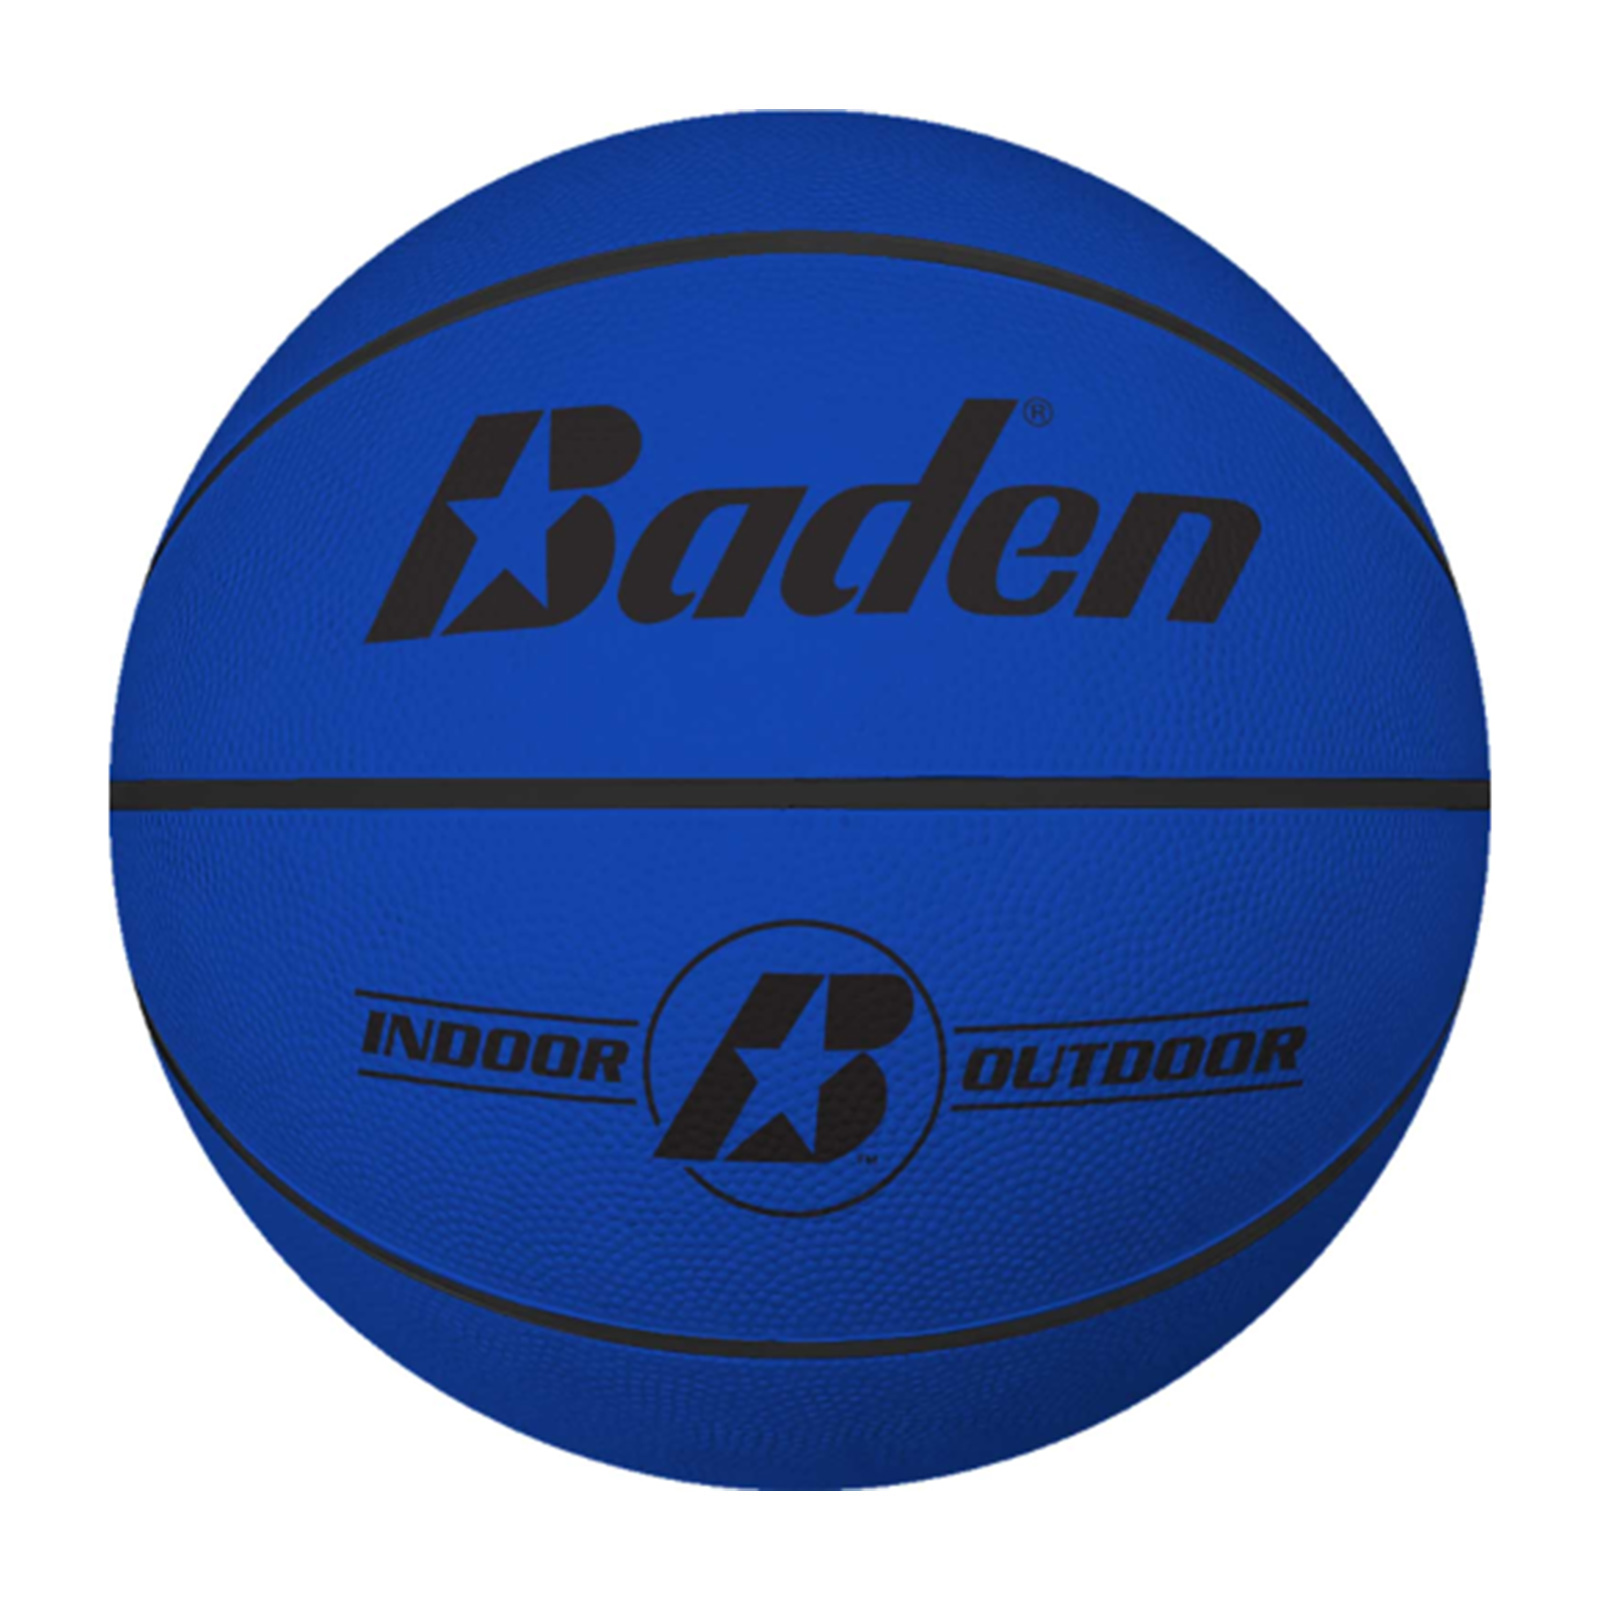 Basketball SG Rubber Coloured Size 5 Blue